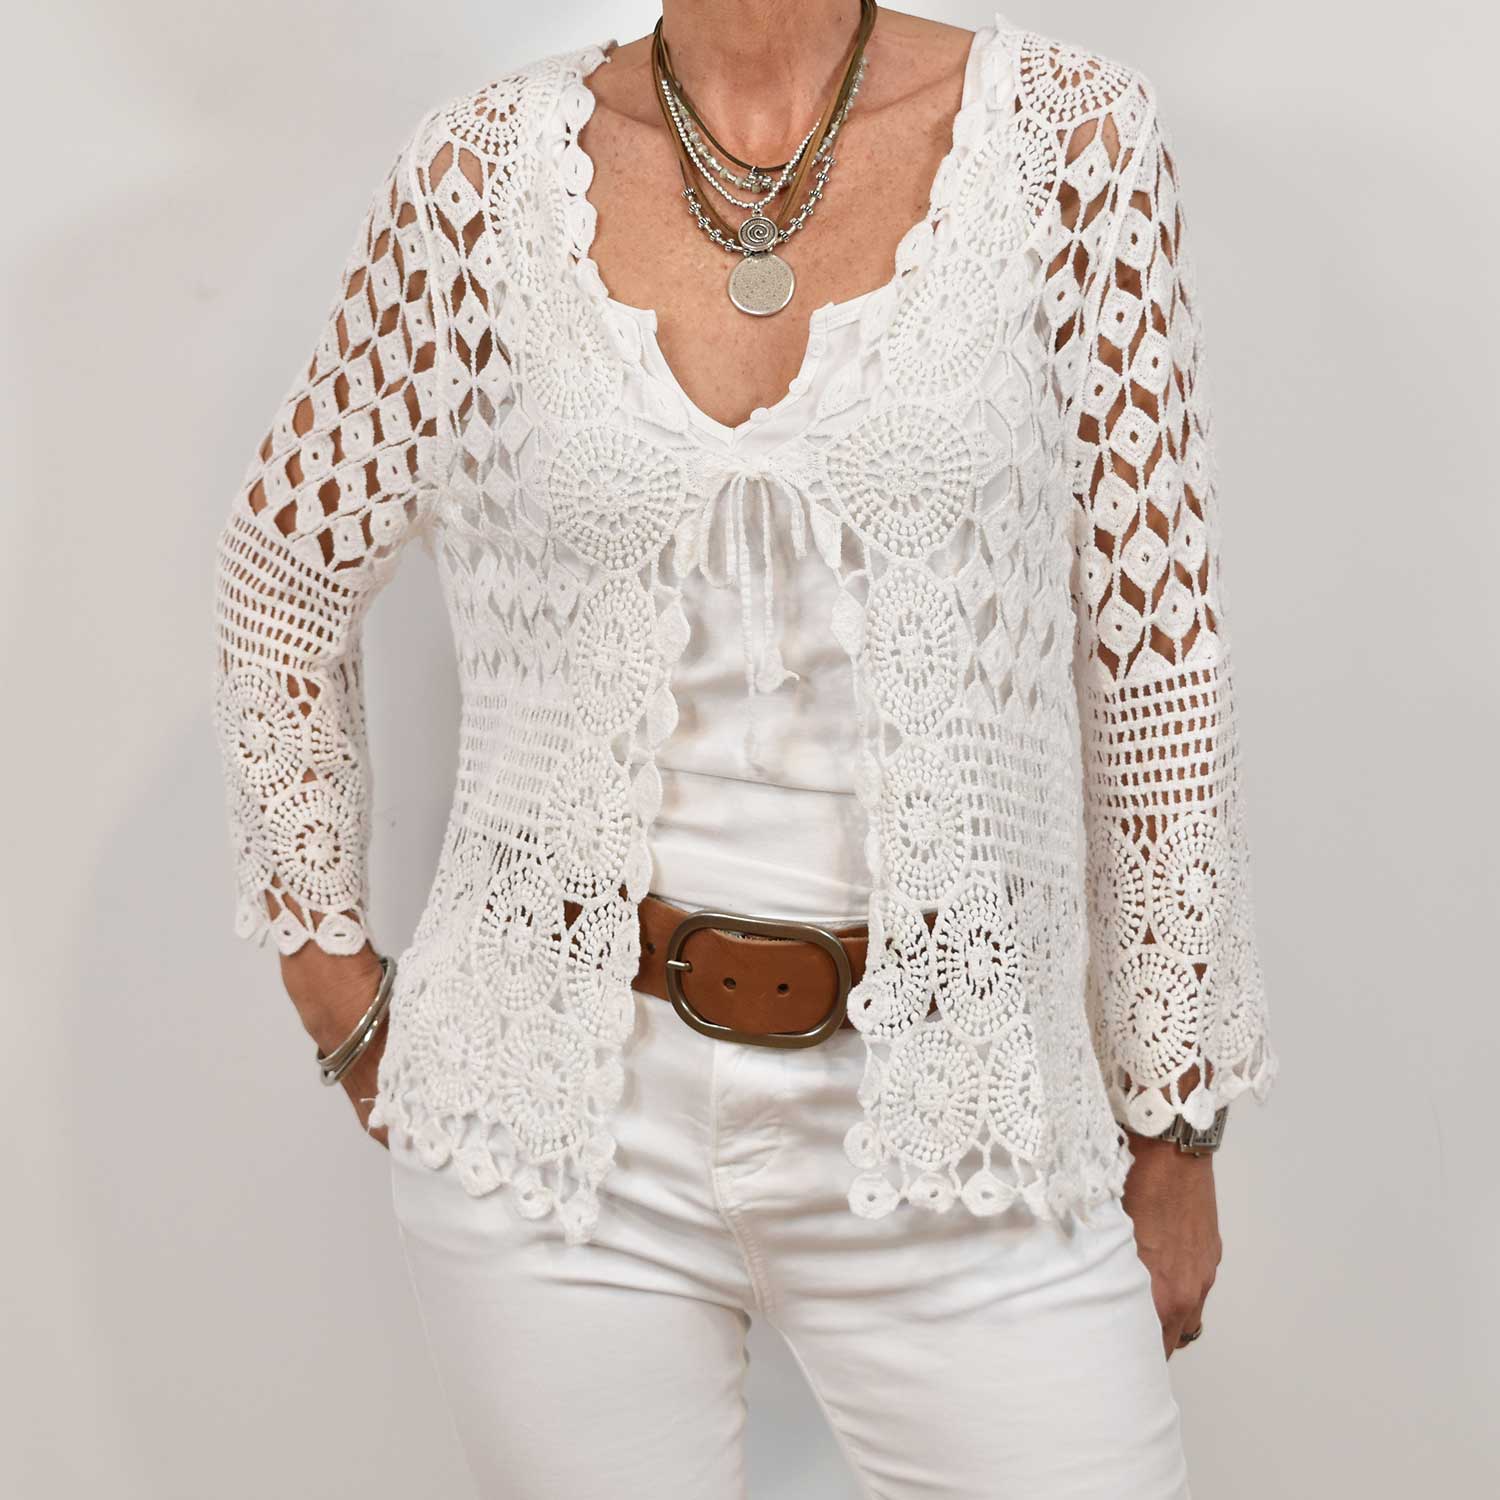 White crochet jacket